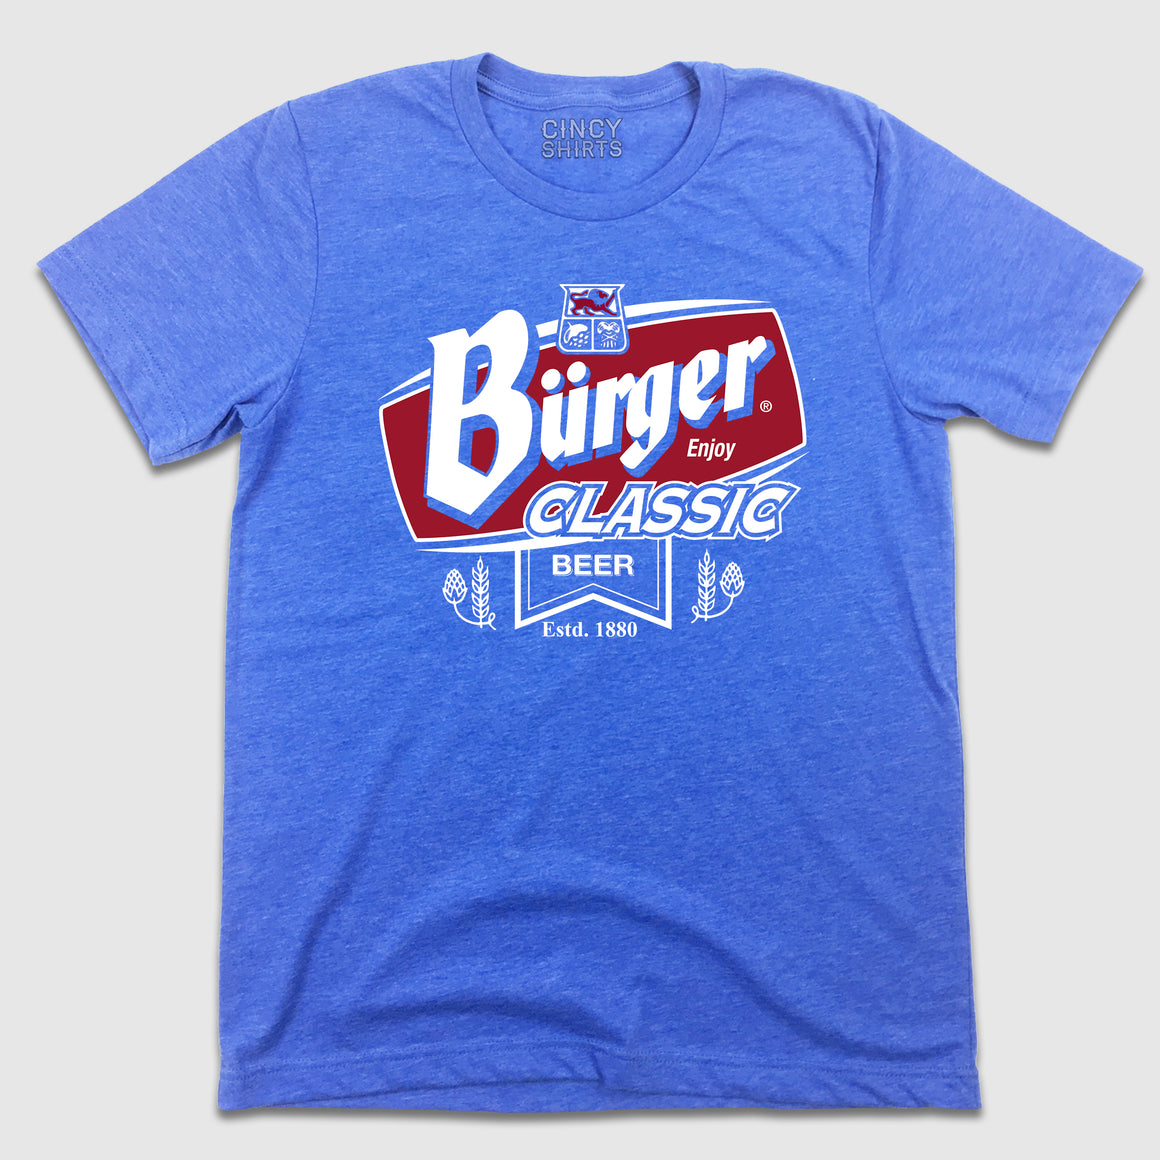 Burger Classic Beer - Cincy Shirts